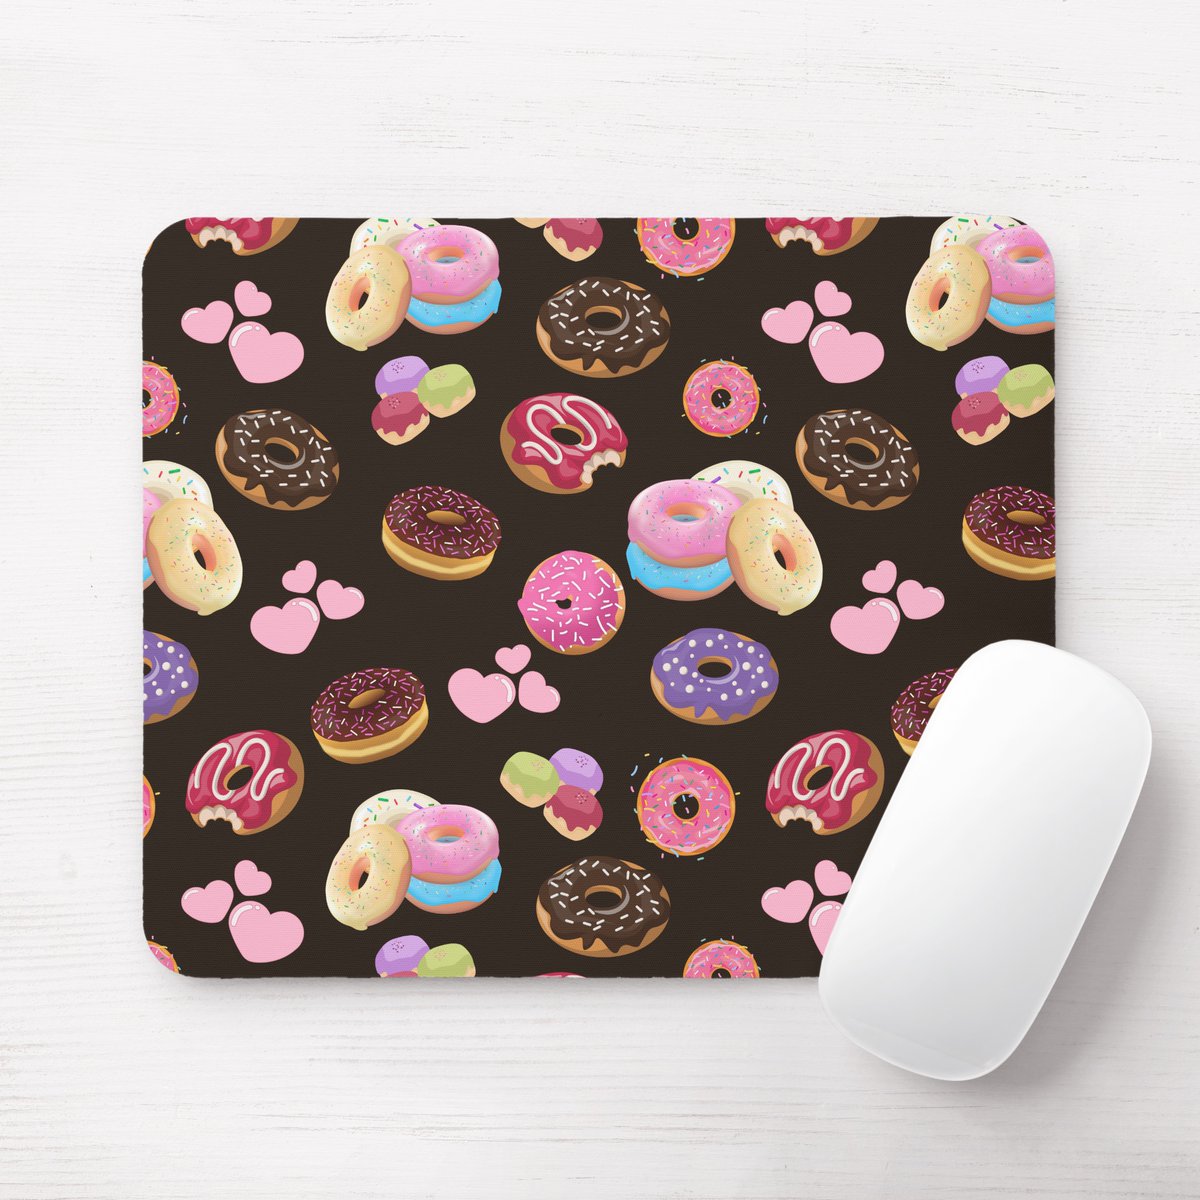 Colorful and Tasty Donuts and Hearts Mouse Pad zazzle.com/z/pueduu68?rf=… via @zazzle